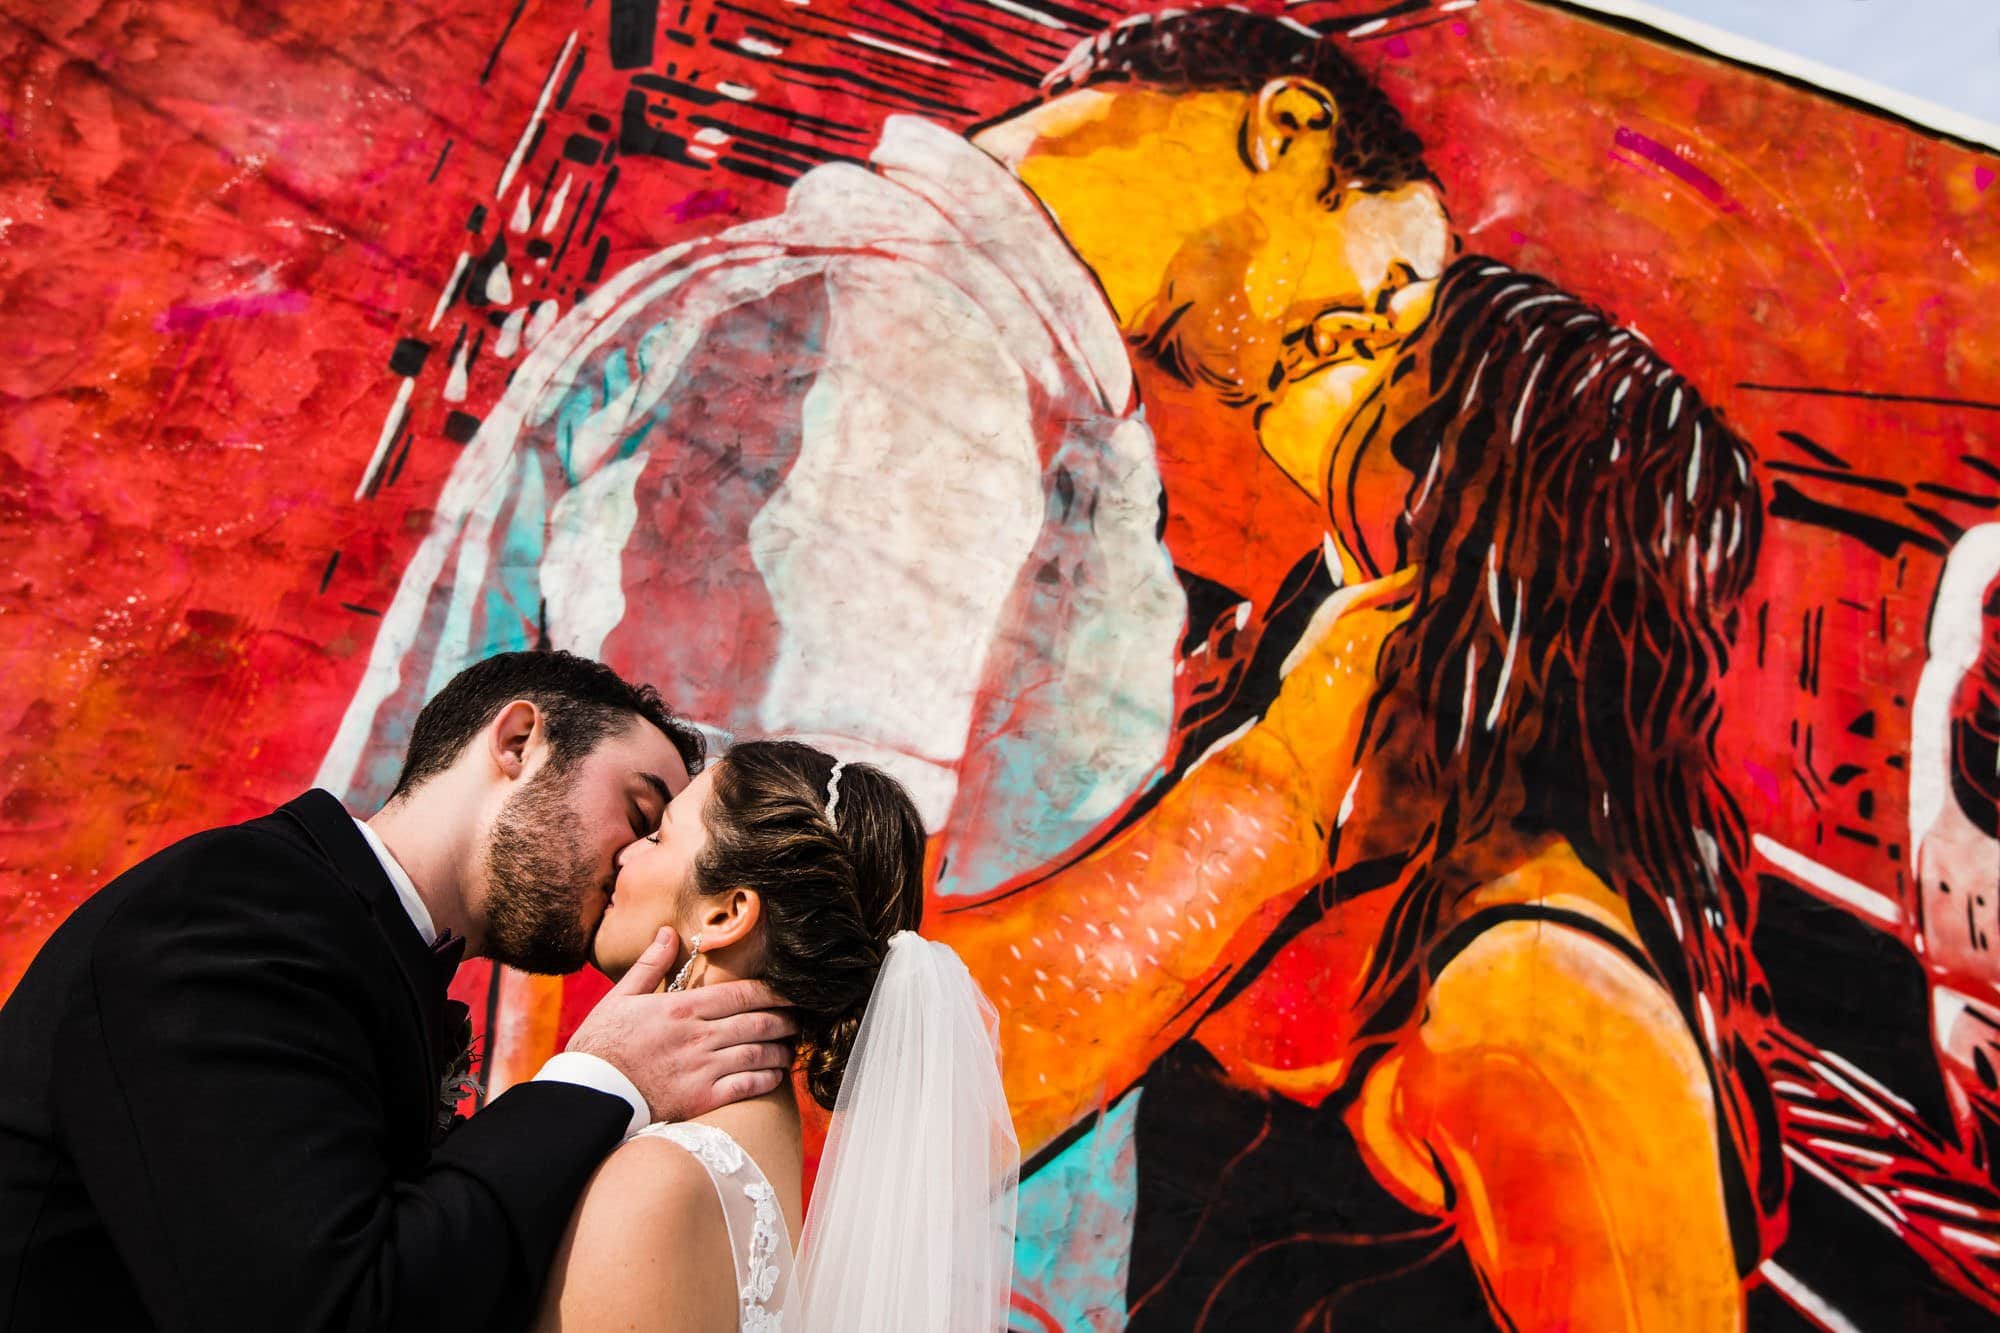 The Bond Wedding Kiss Mural in York, PA